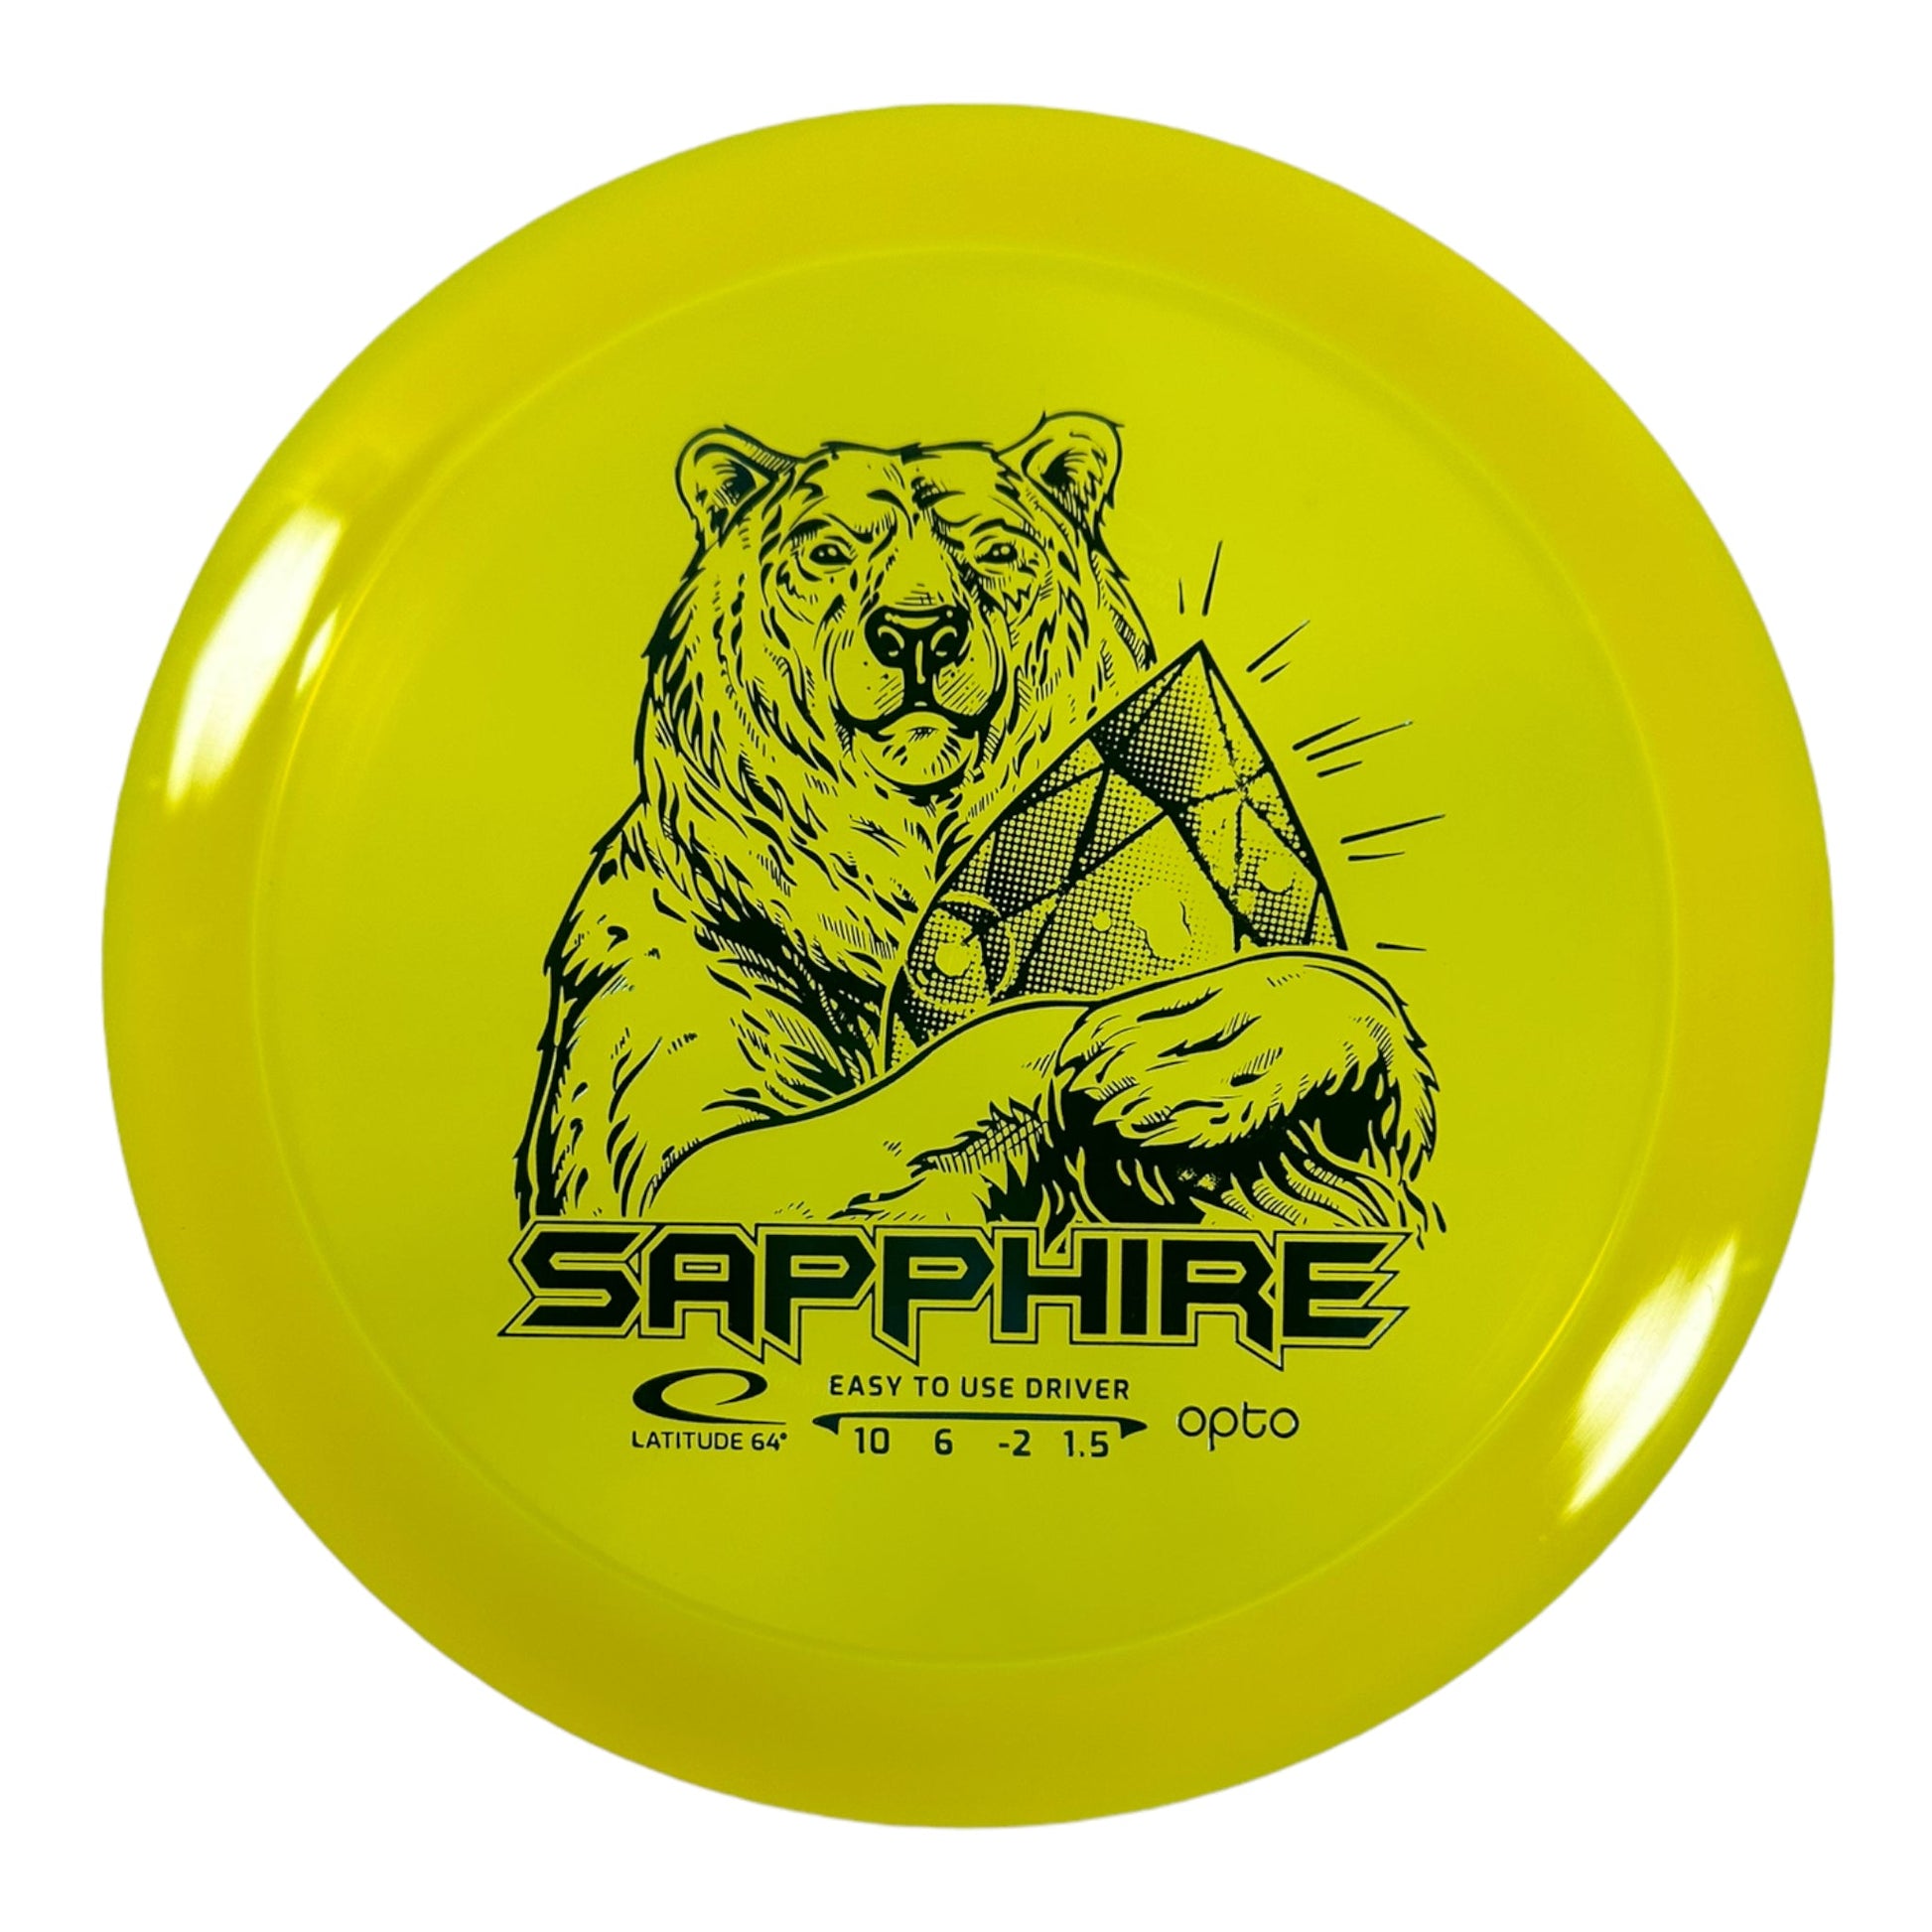 Latitude 64 Sapphire | Opto | Yellow/Blue 156g Disc Golf